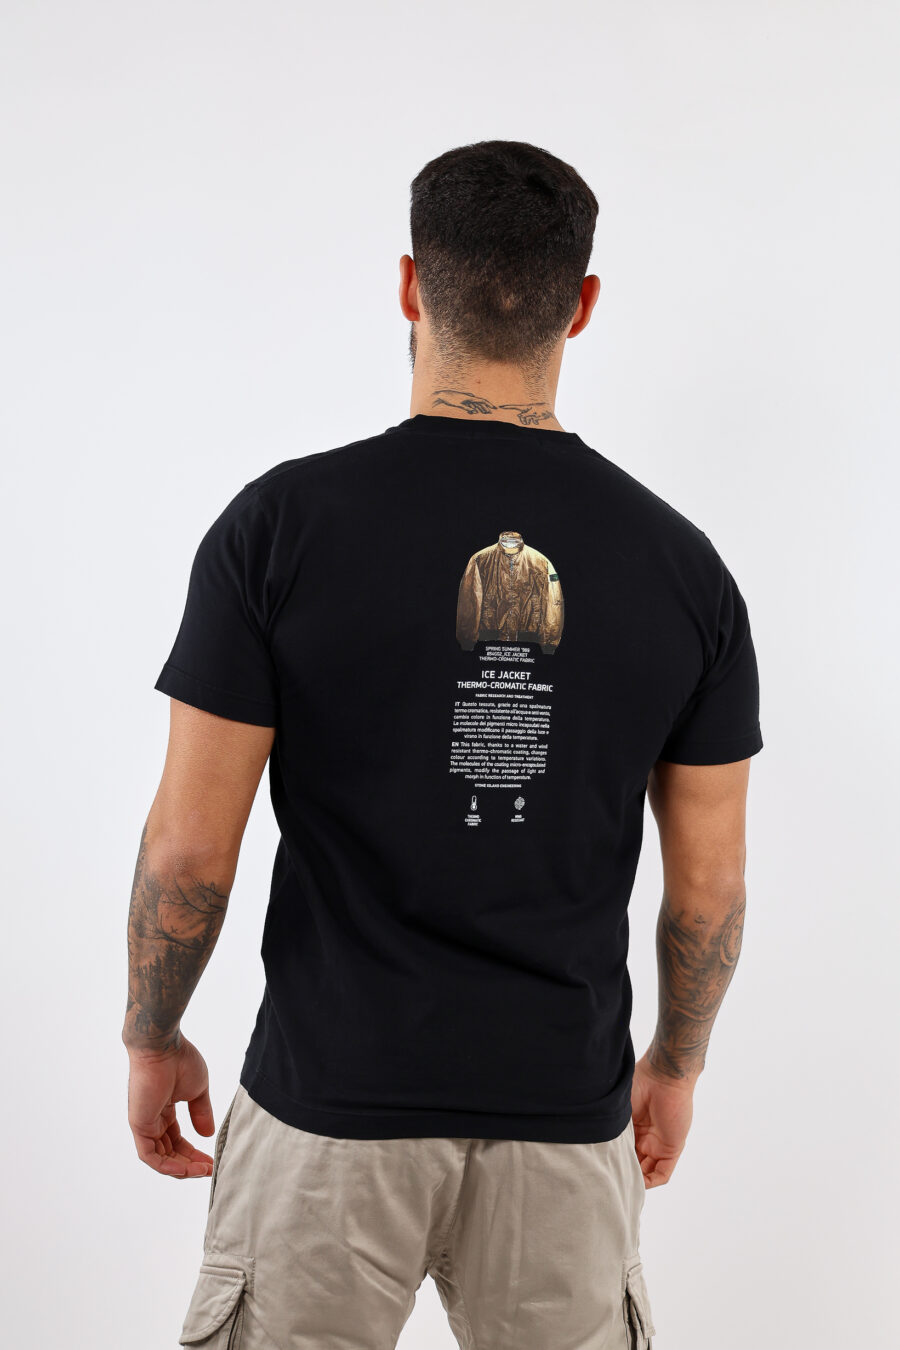 T-shirt preta com mini-logotipo "archivio" centrado - BLS Fashion 155